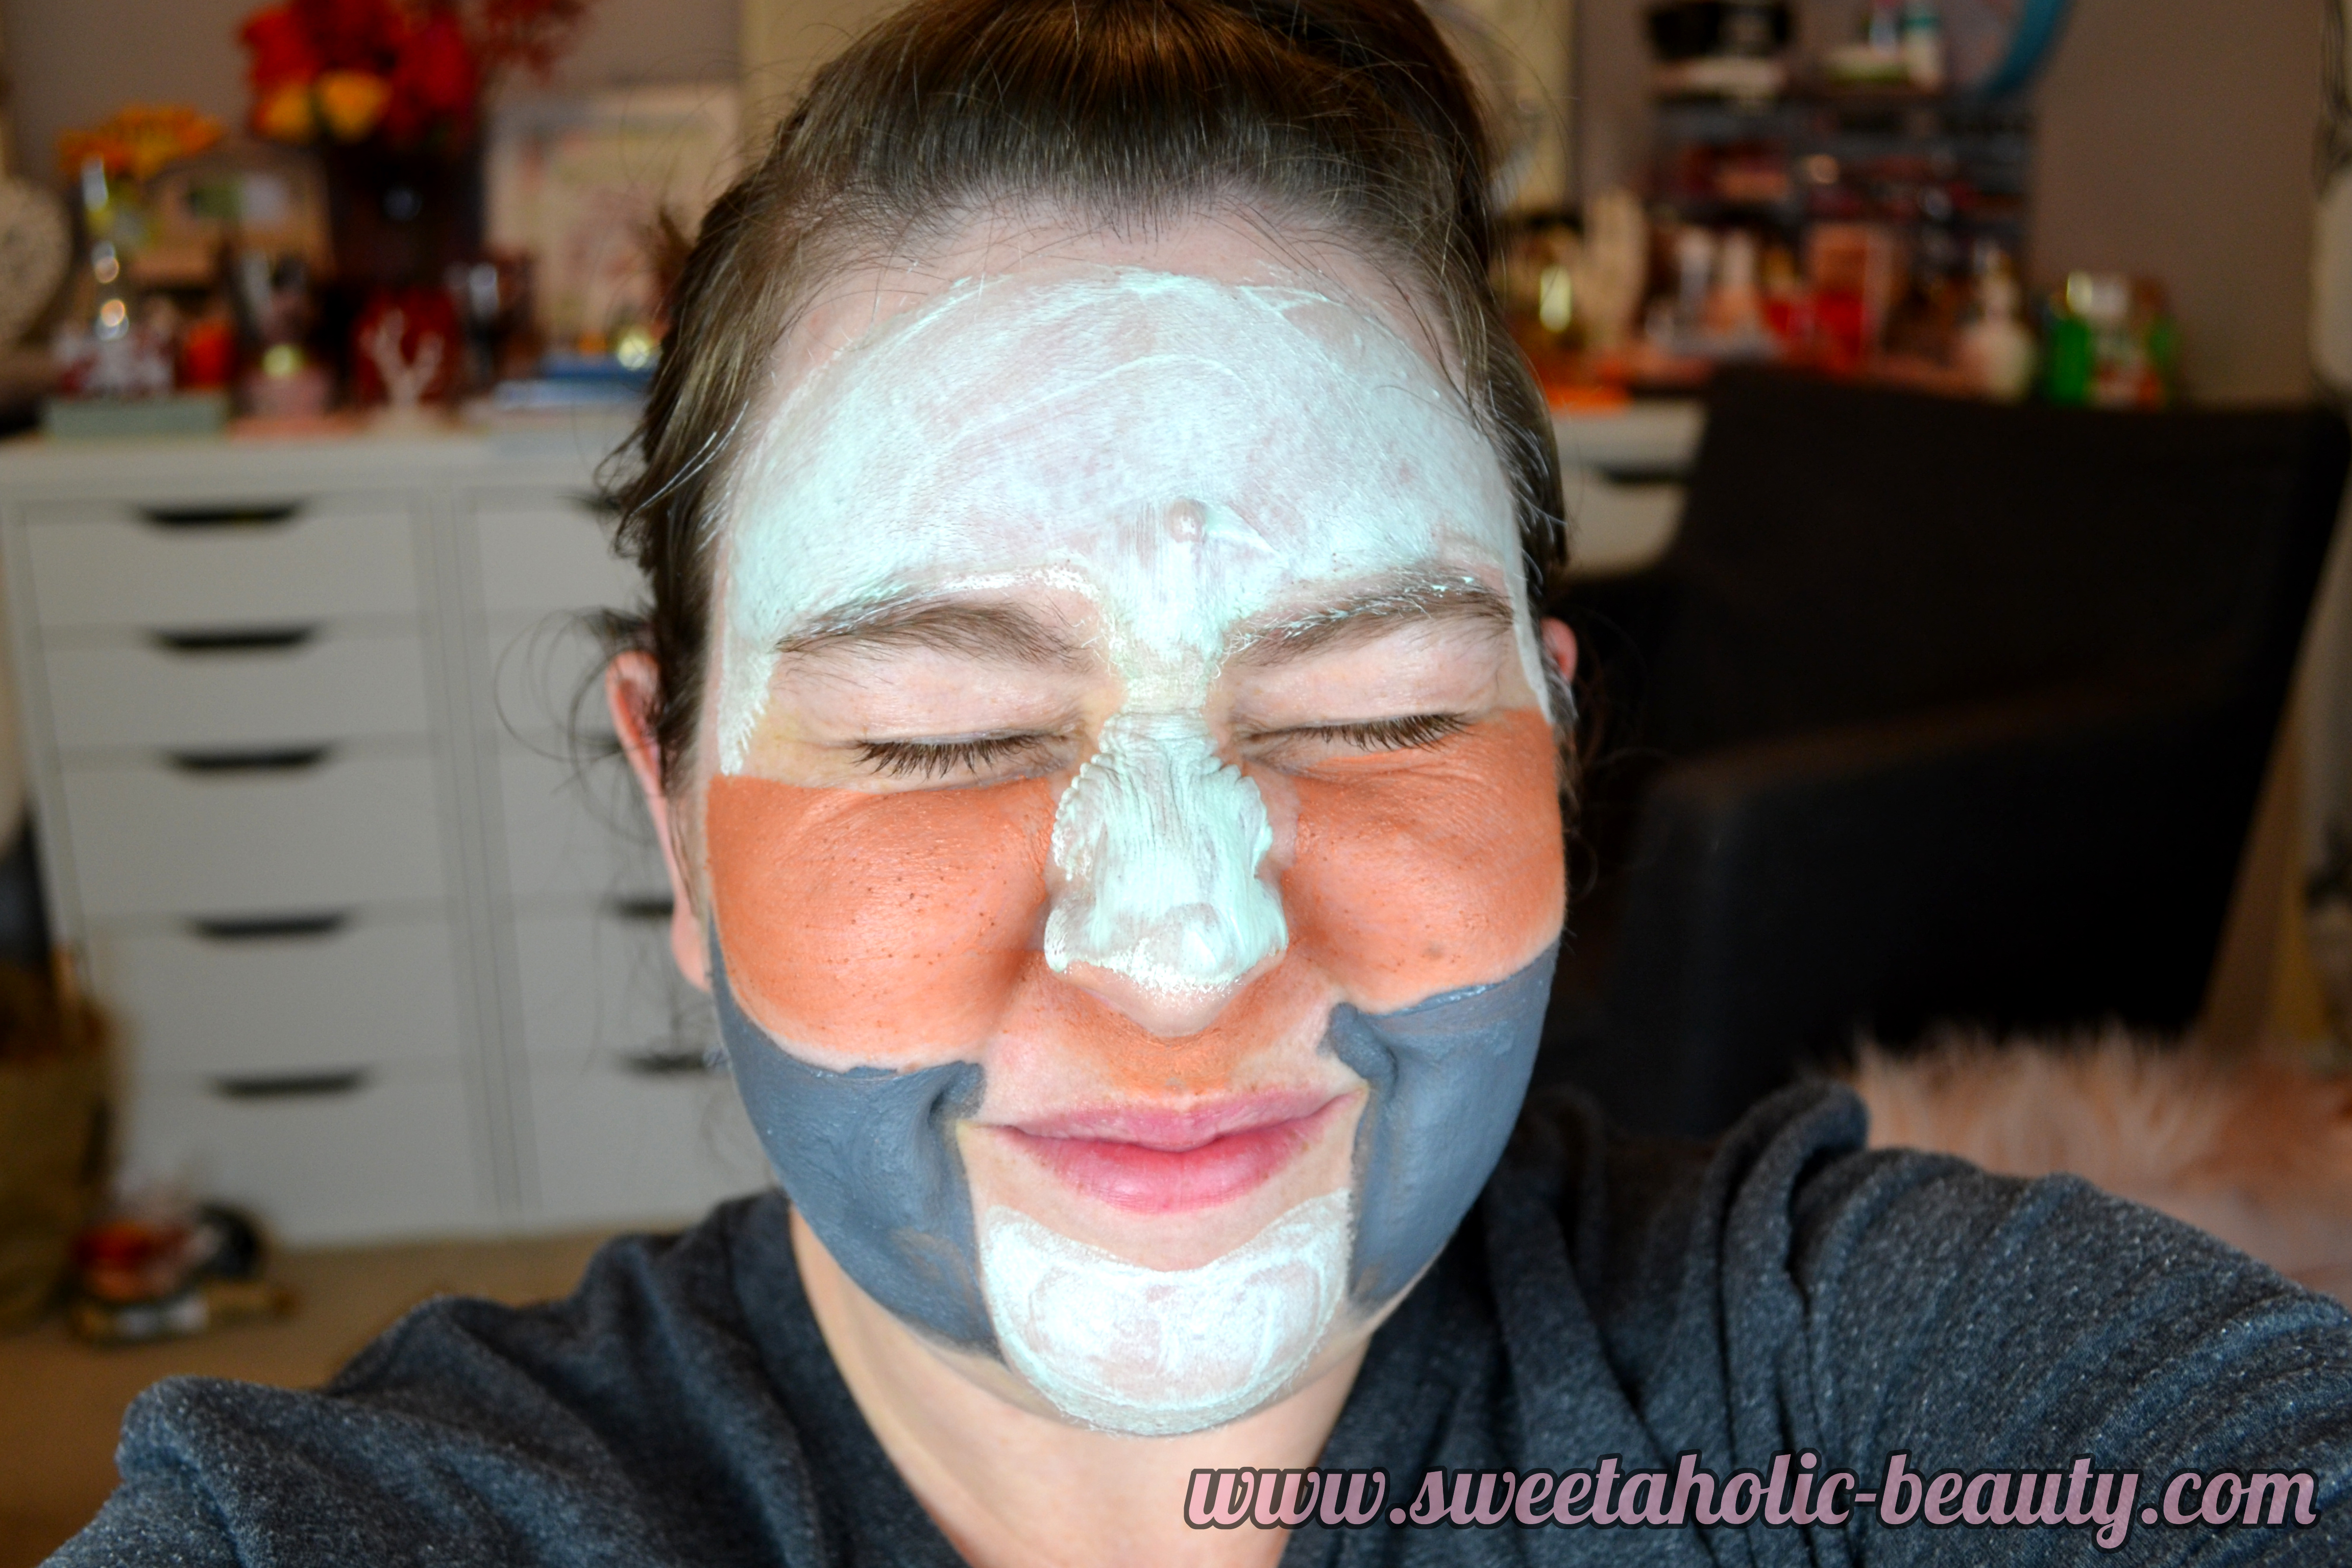 L'Oreal Pure Clay Masks Review - Sweetaholic Beauty